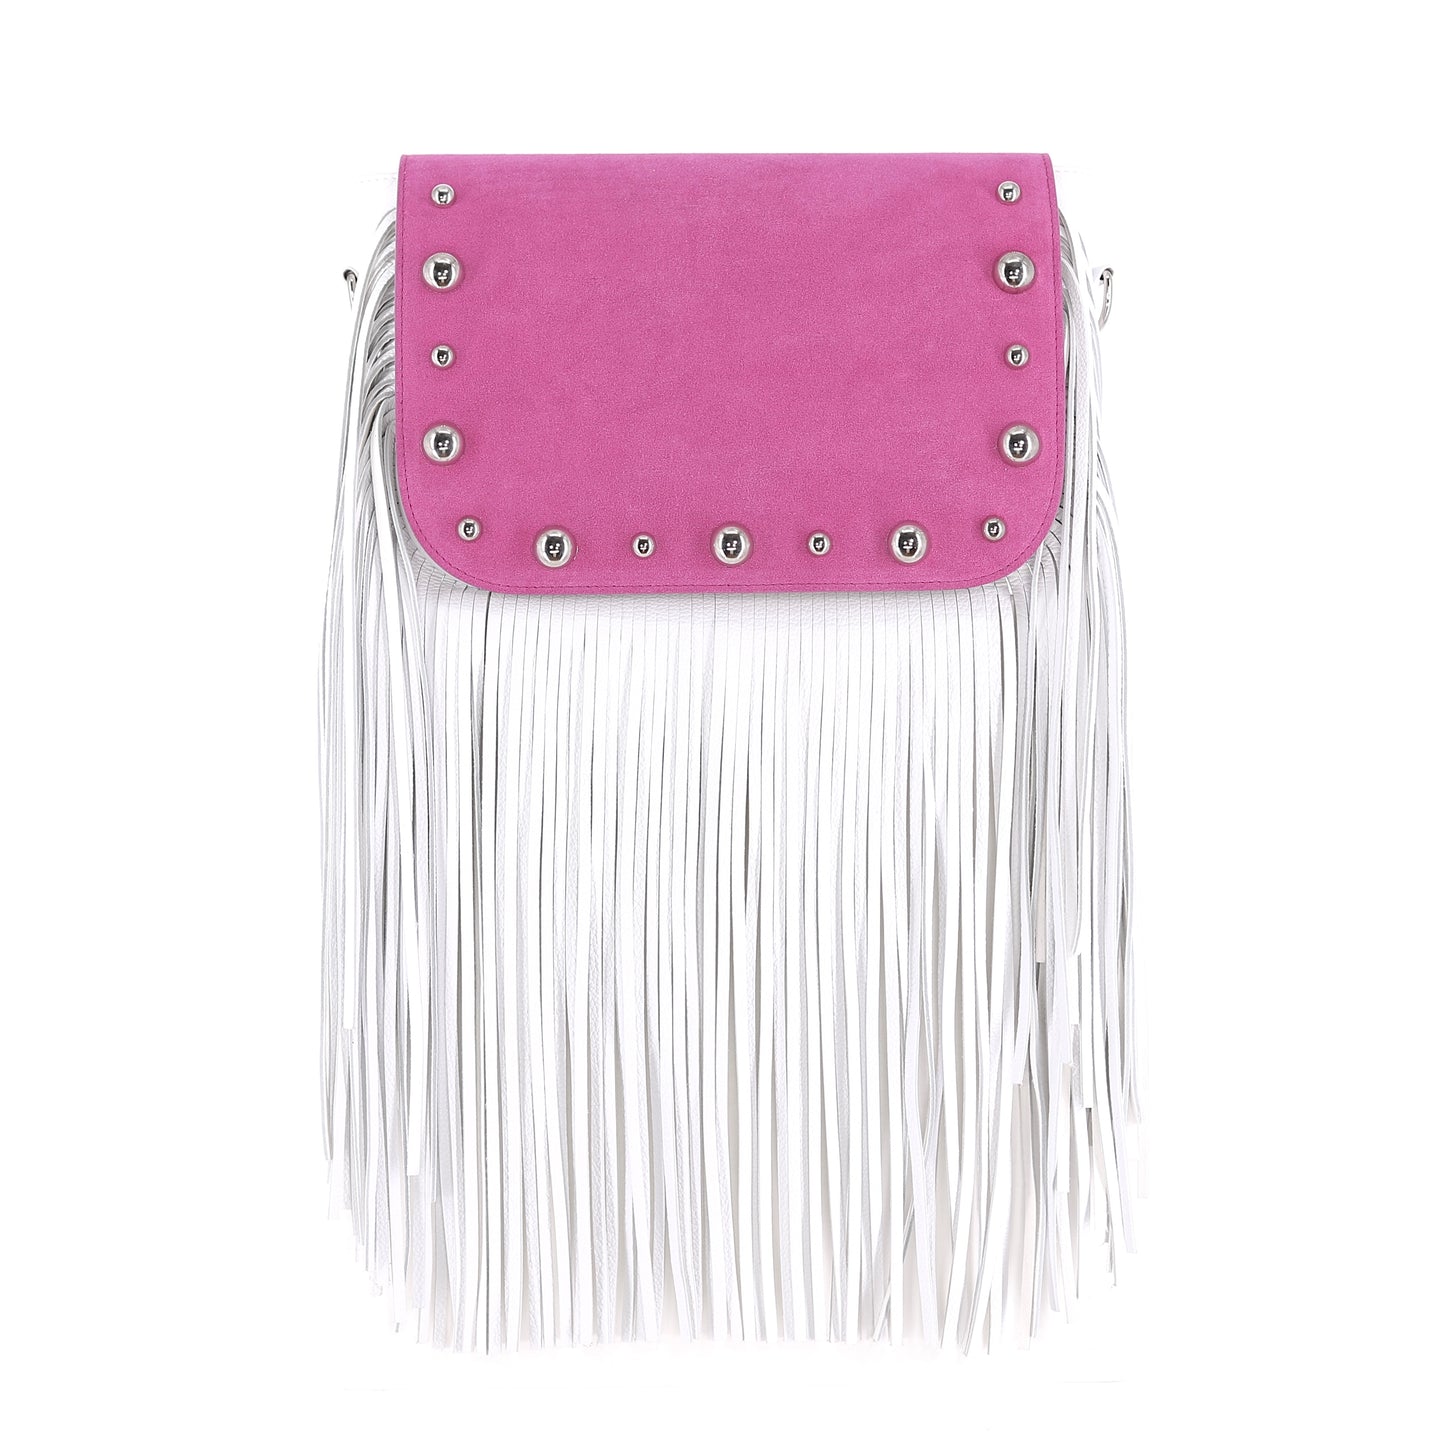 GABRIELLE handbag with fringes genuine leather white medium